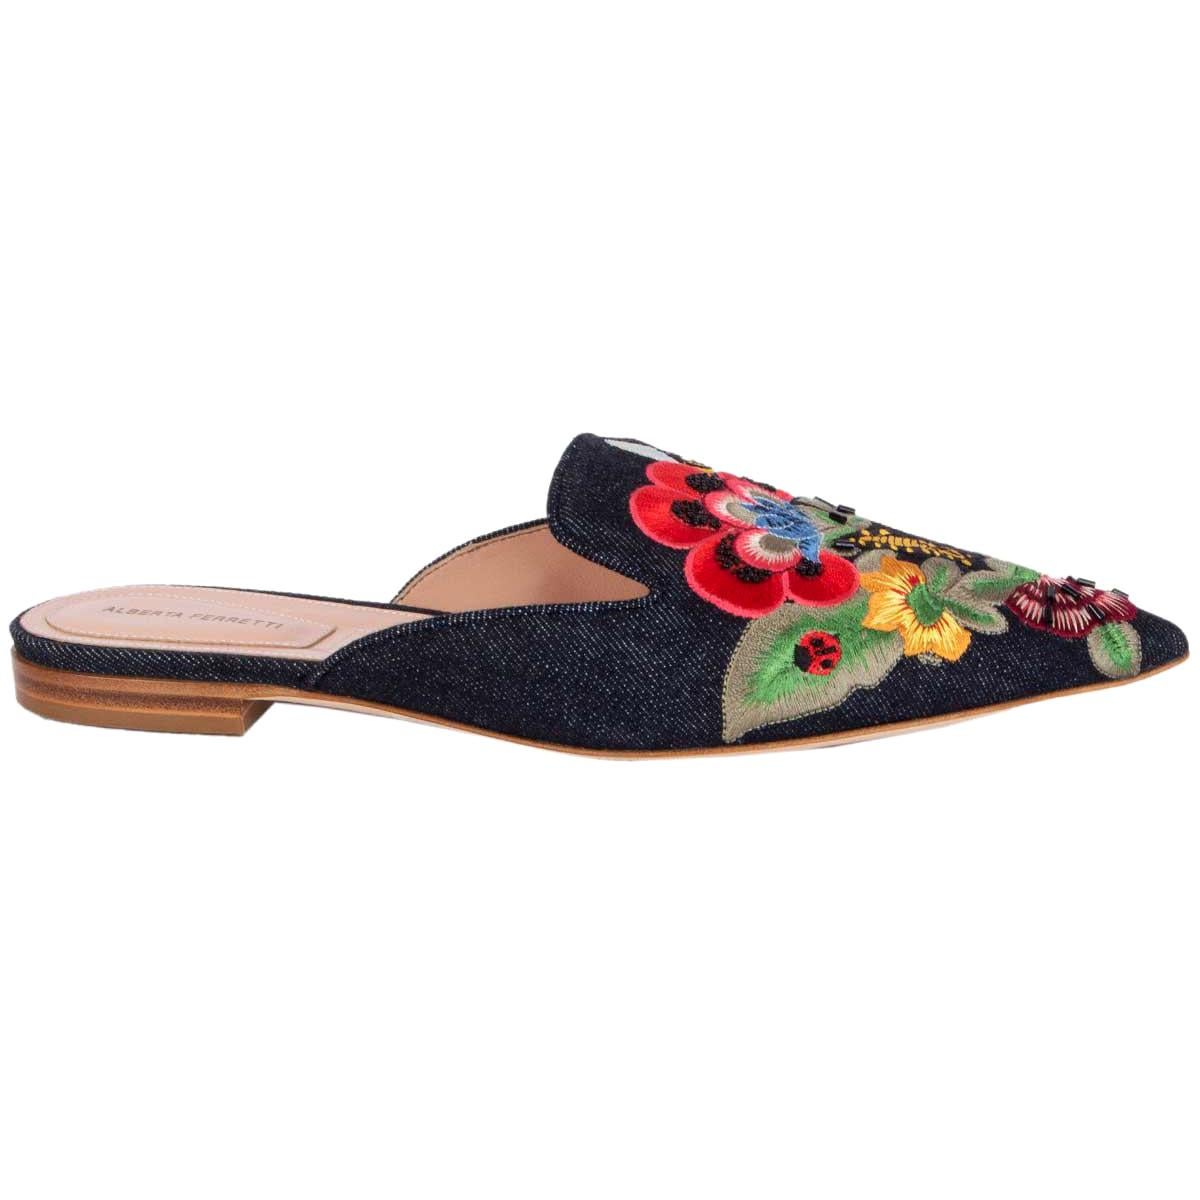 ALBERTA FERRETTI multicolor FLOWER EMBROIDERED Denim Slides Mules Shoes 38